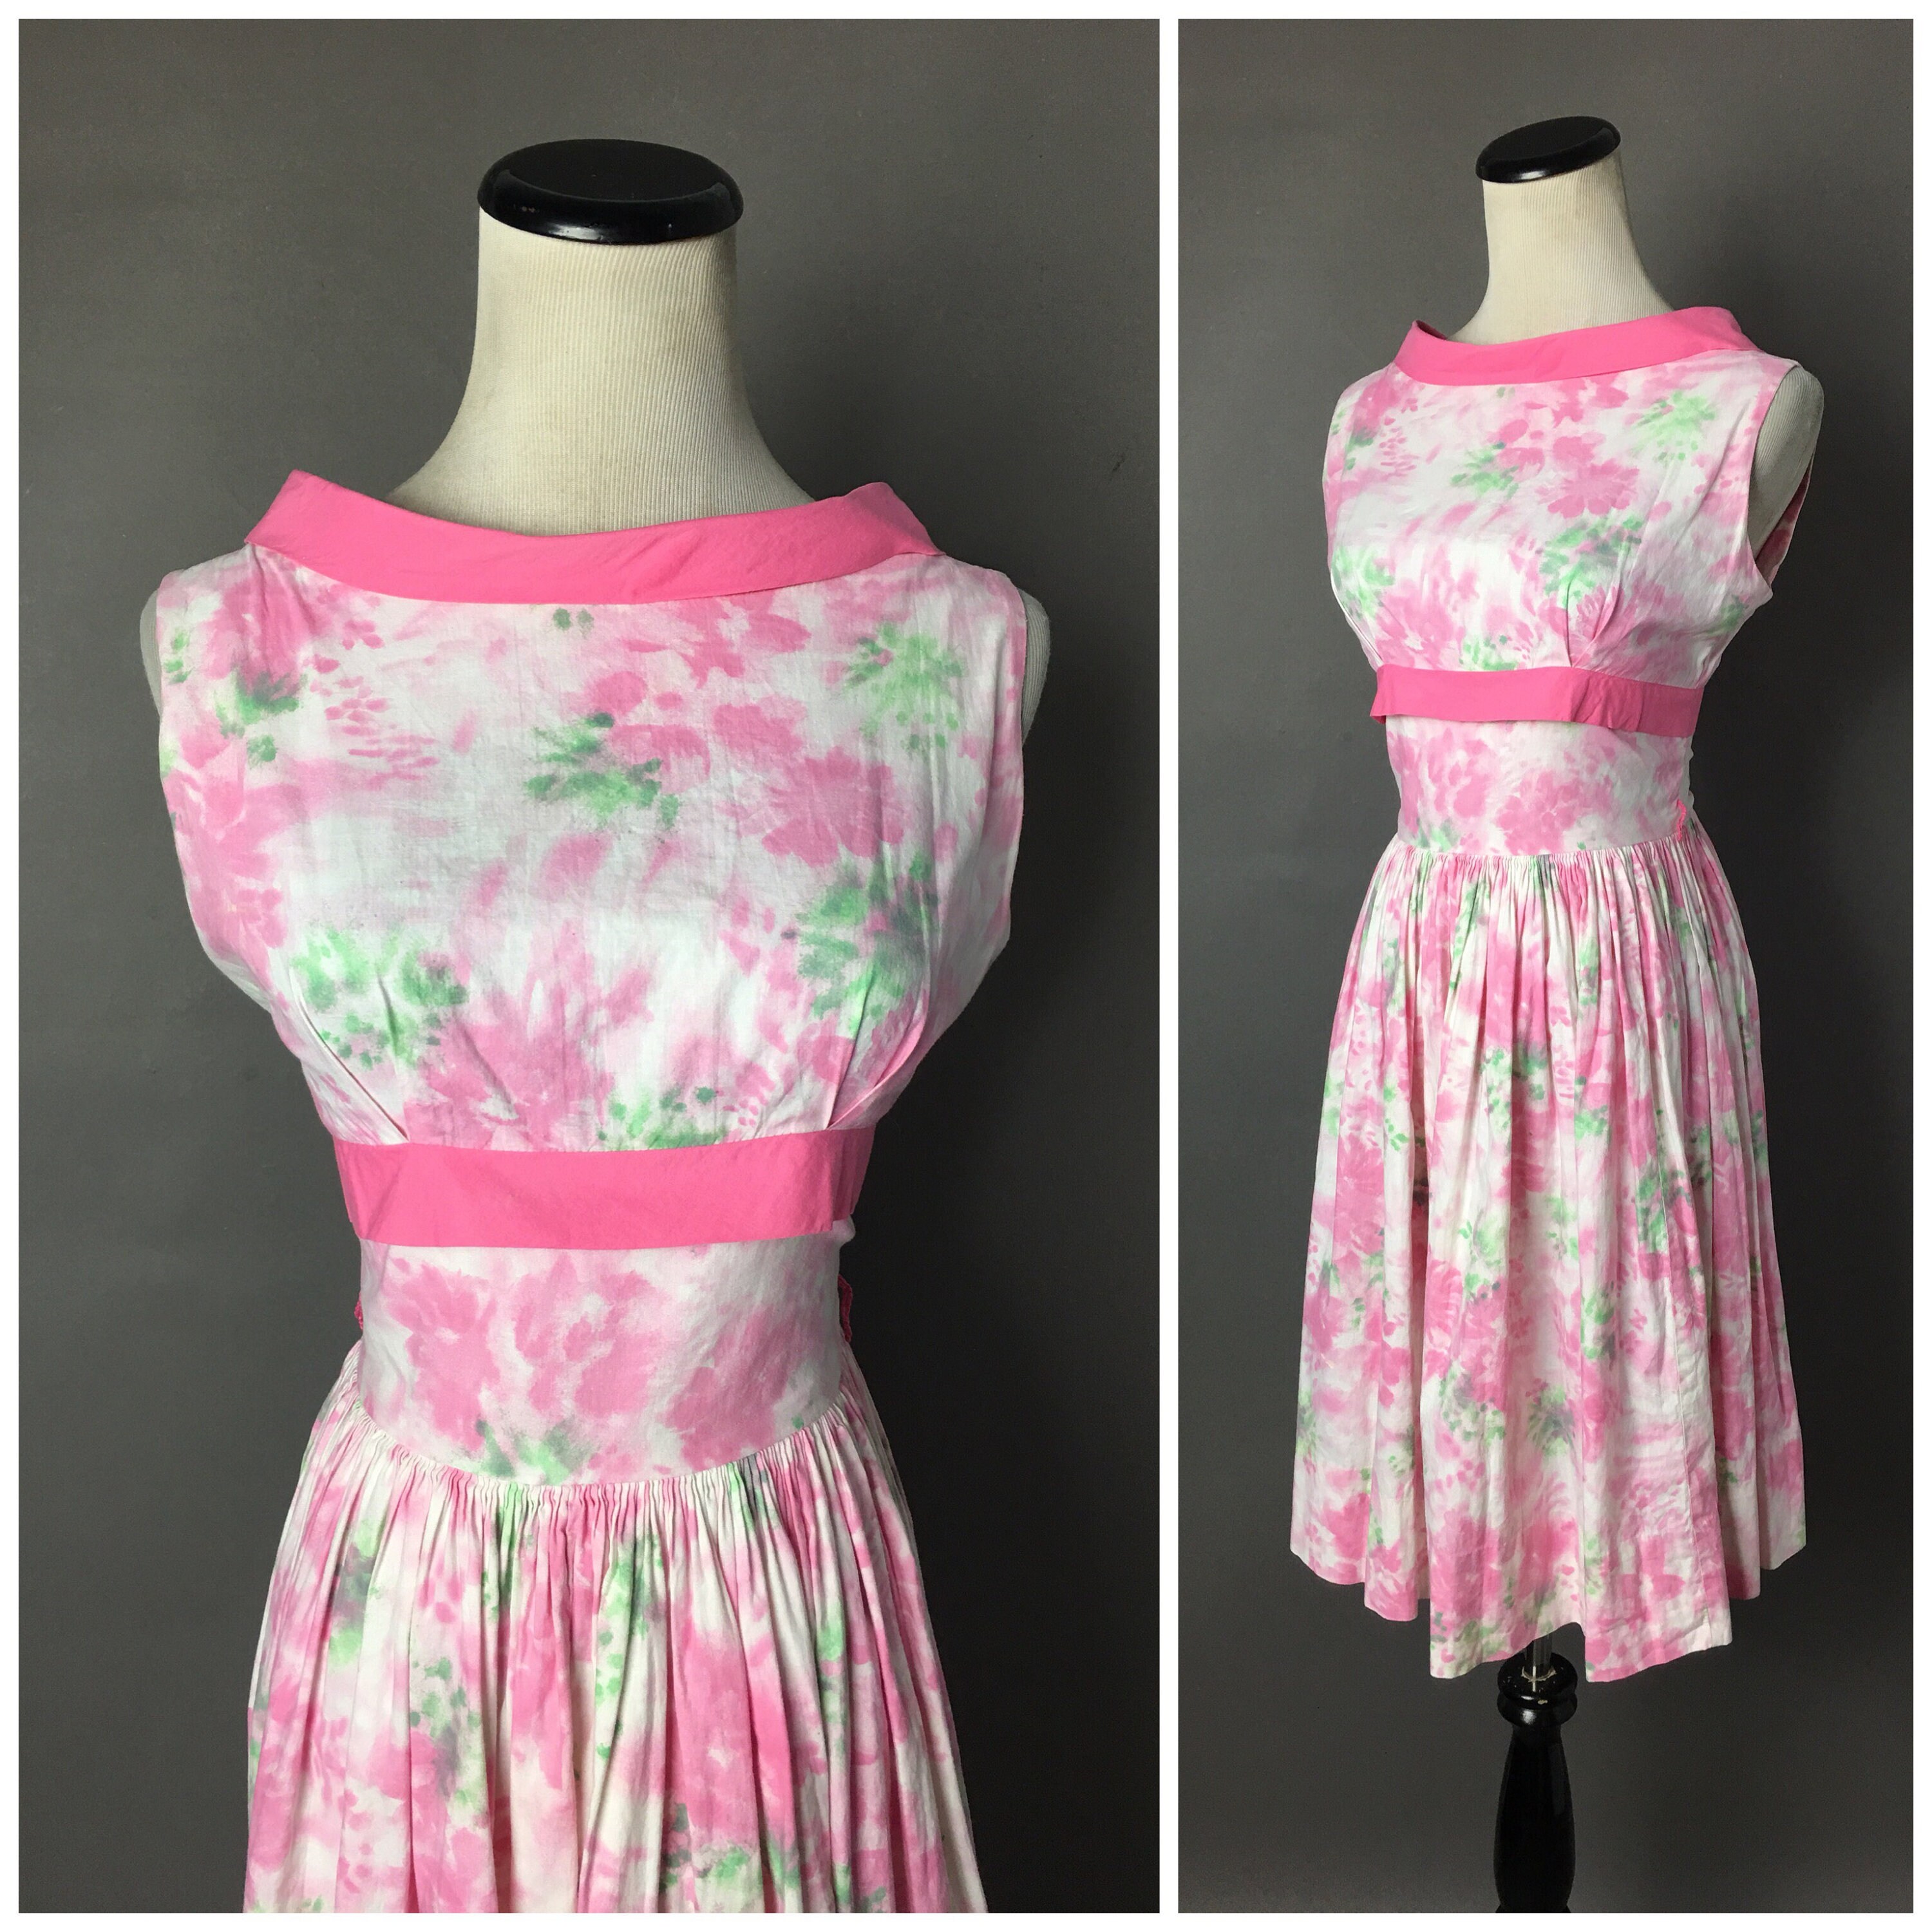 Vintage 50s dress / 1950s dress / floral dress / fit and flare | Etsy